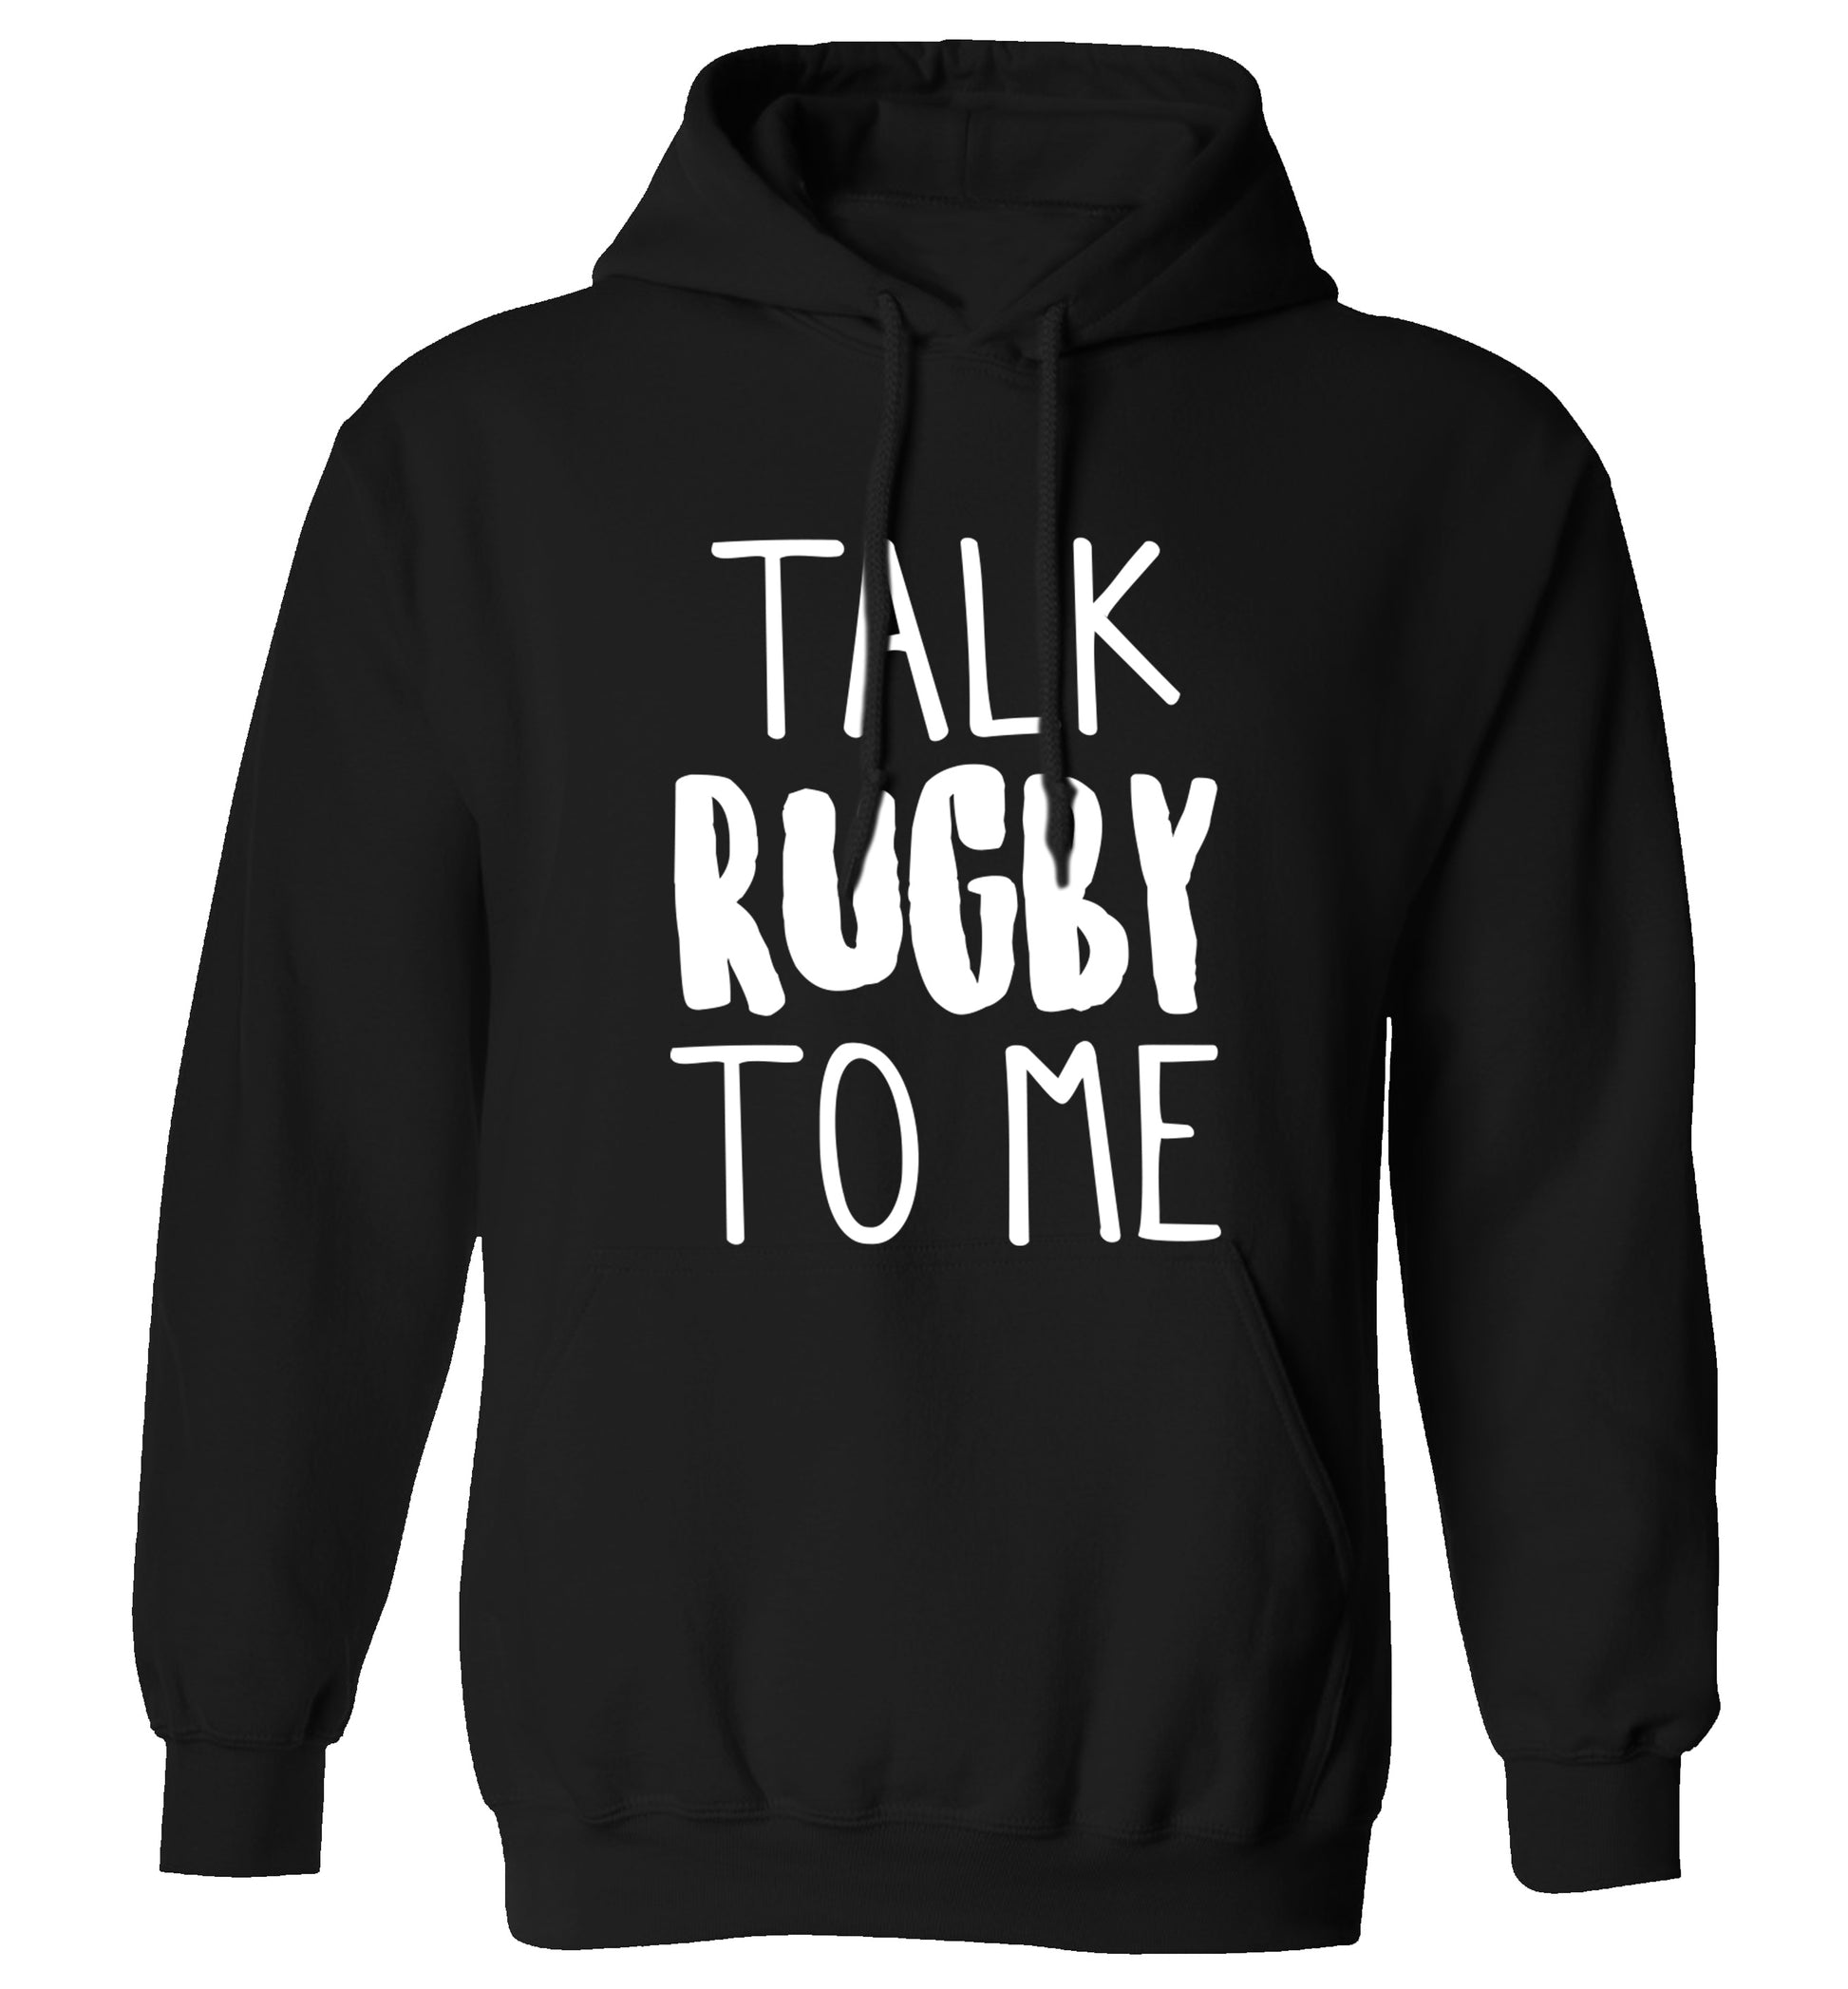 Talk rugby to me adults unisex black hoodie 2XL